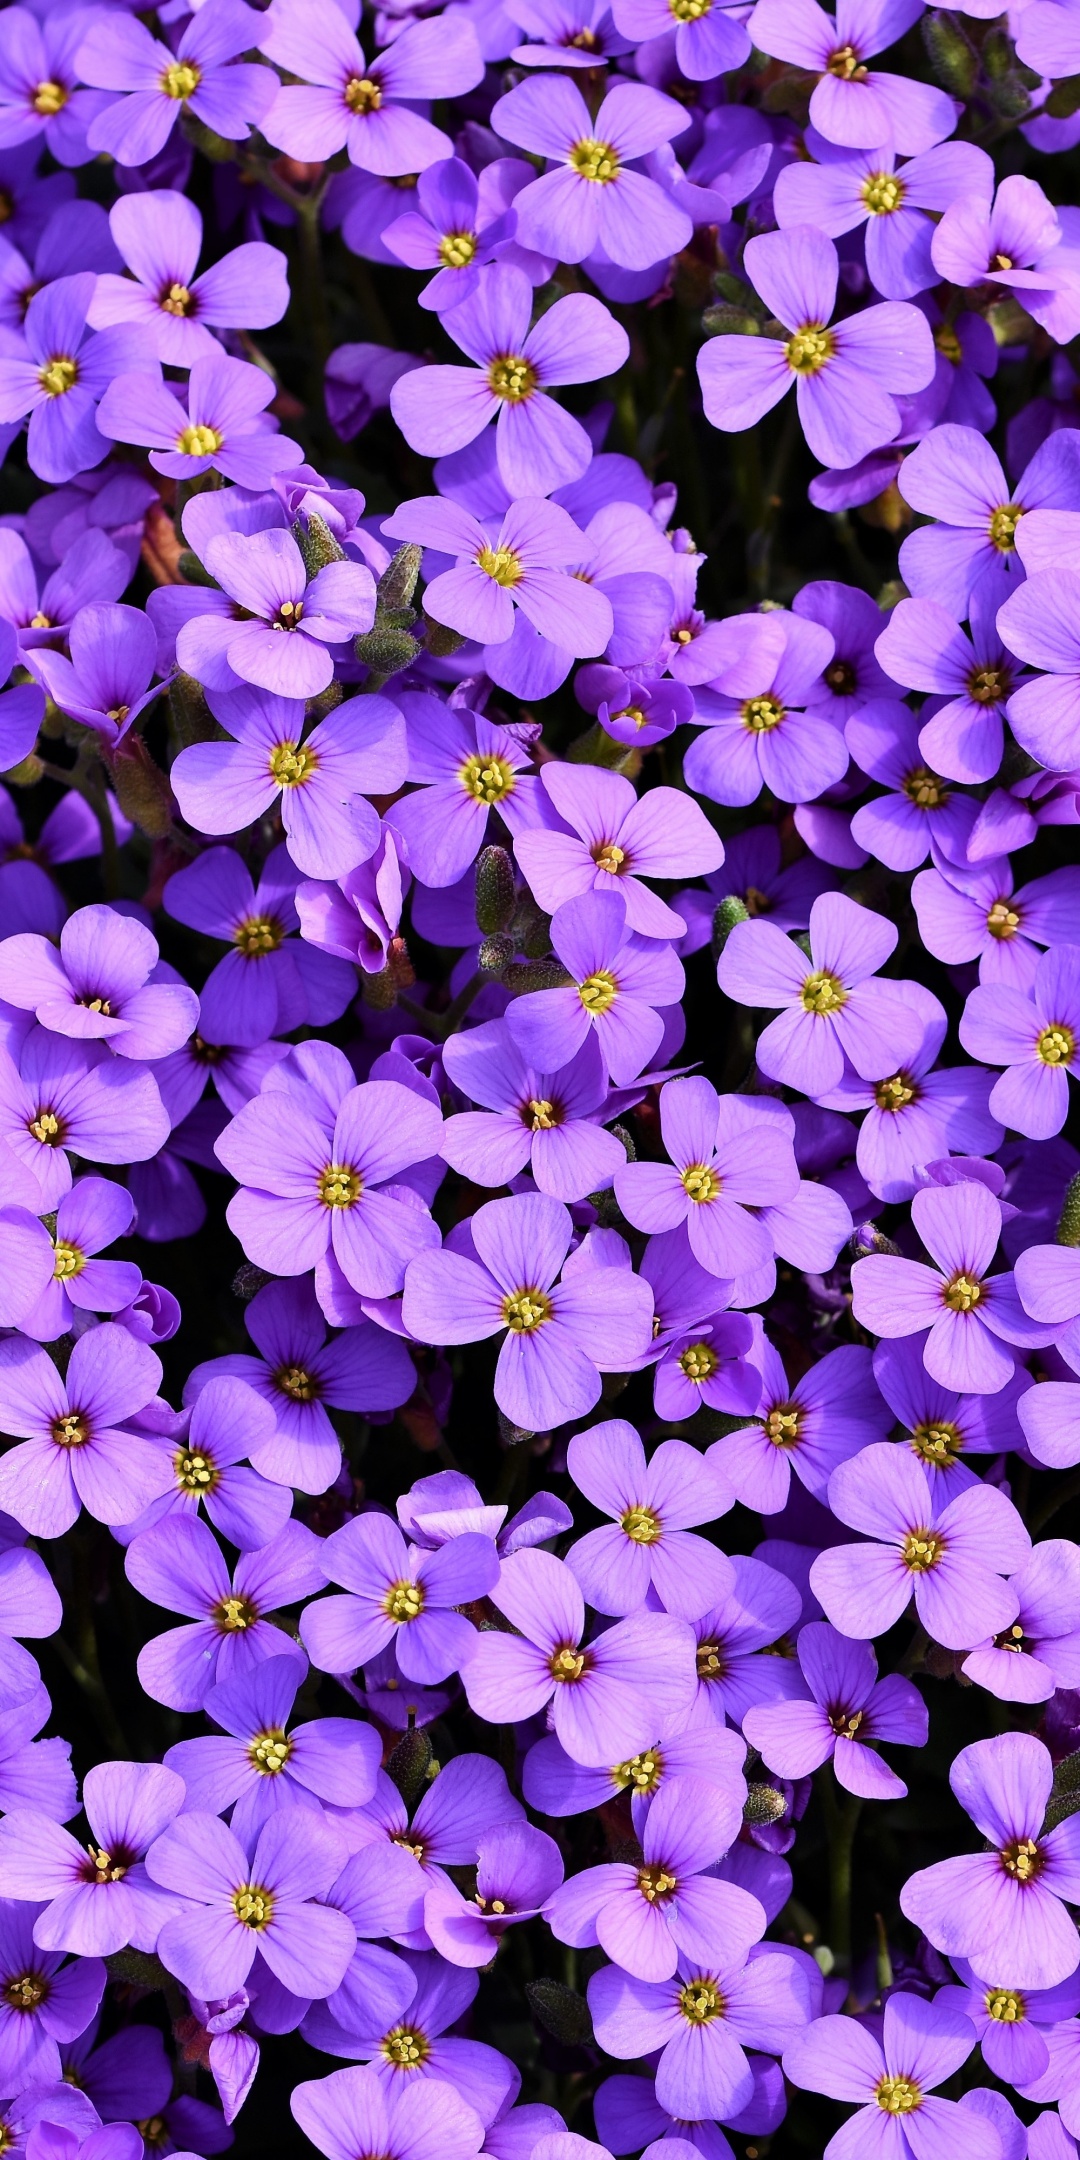 Aubrieta 4K Wallpaper, Violet flowers, Blossom, Spring